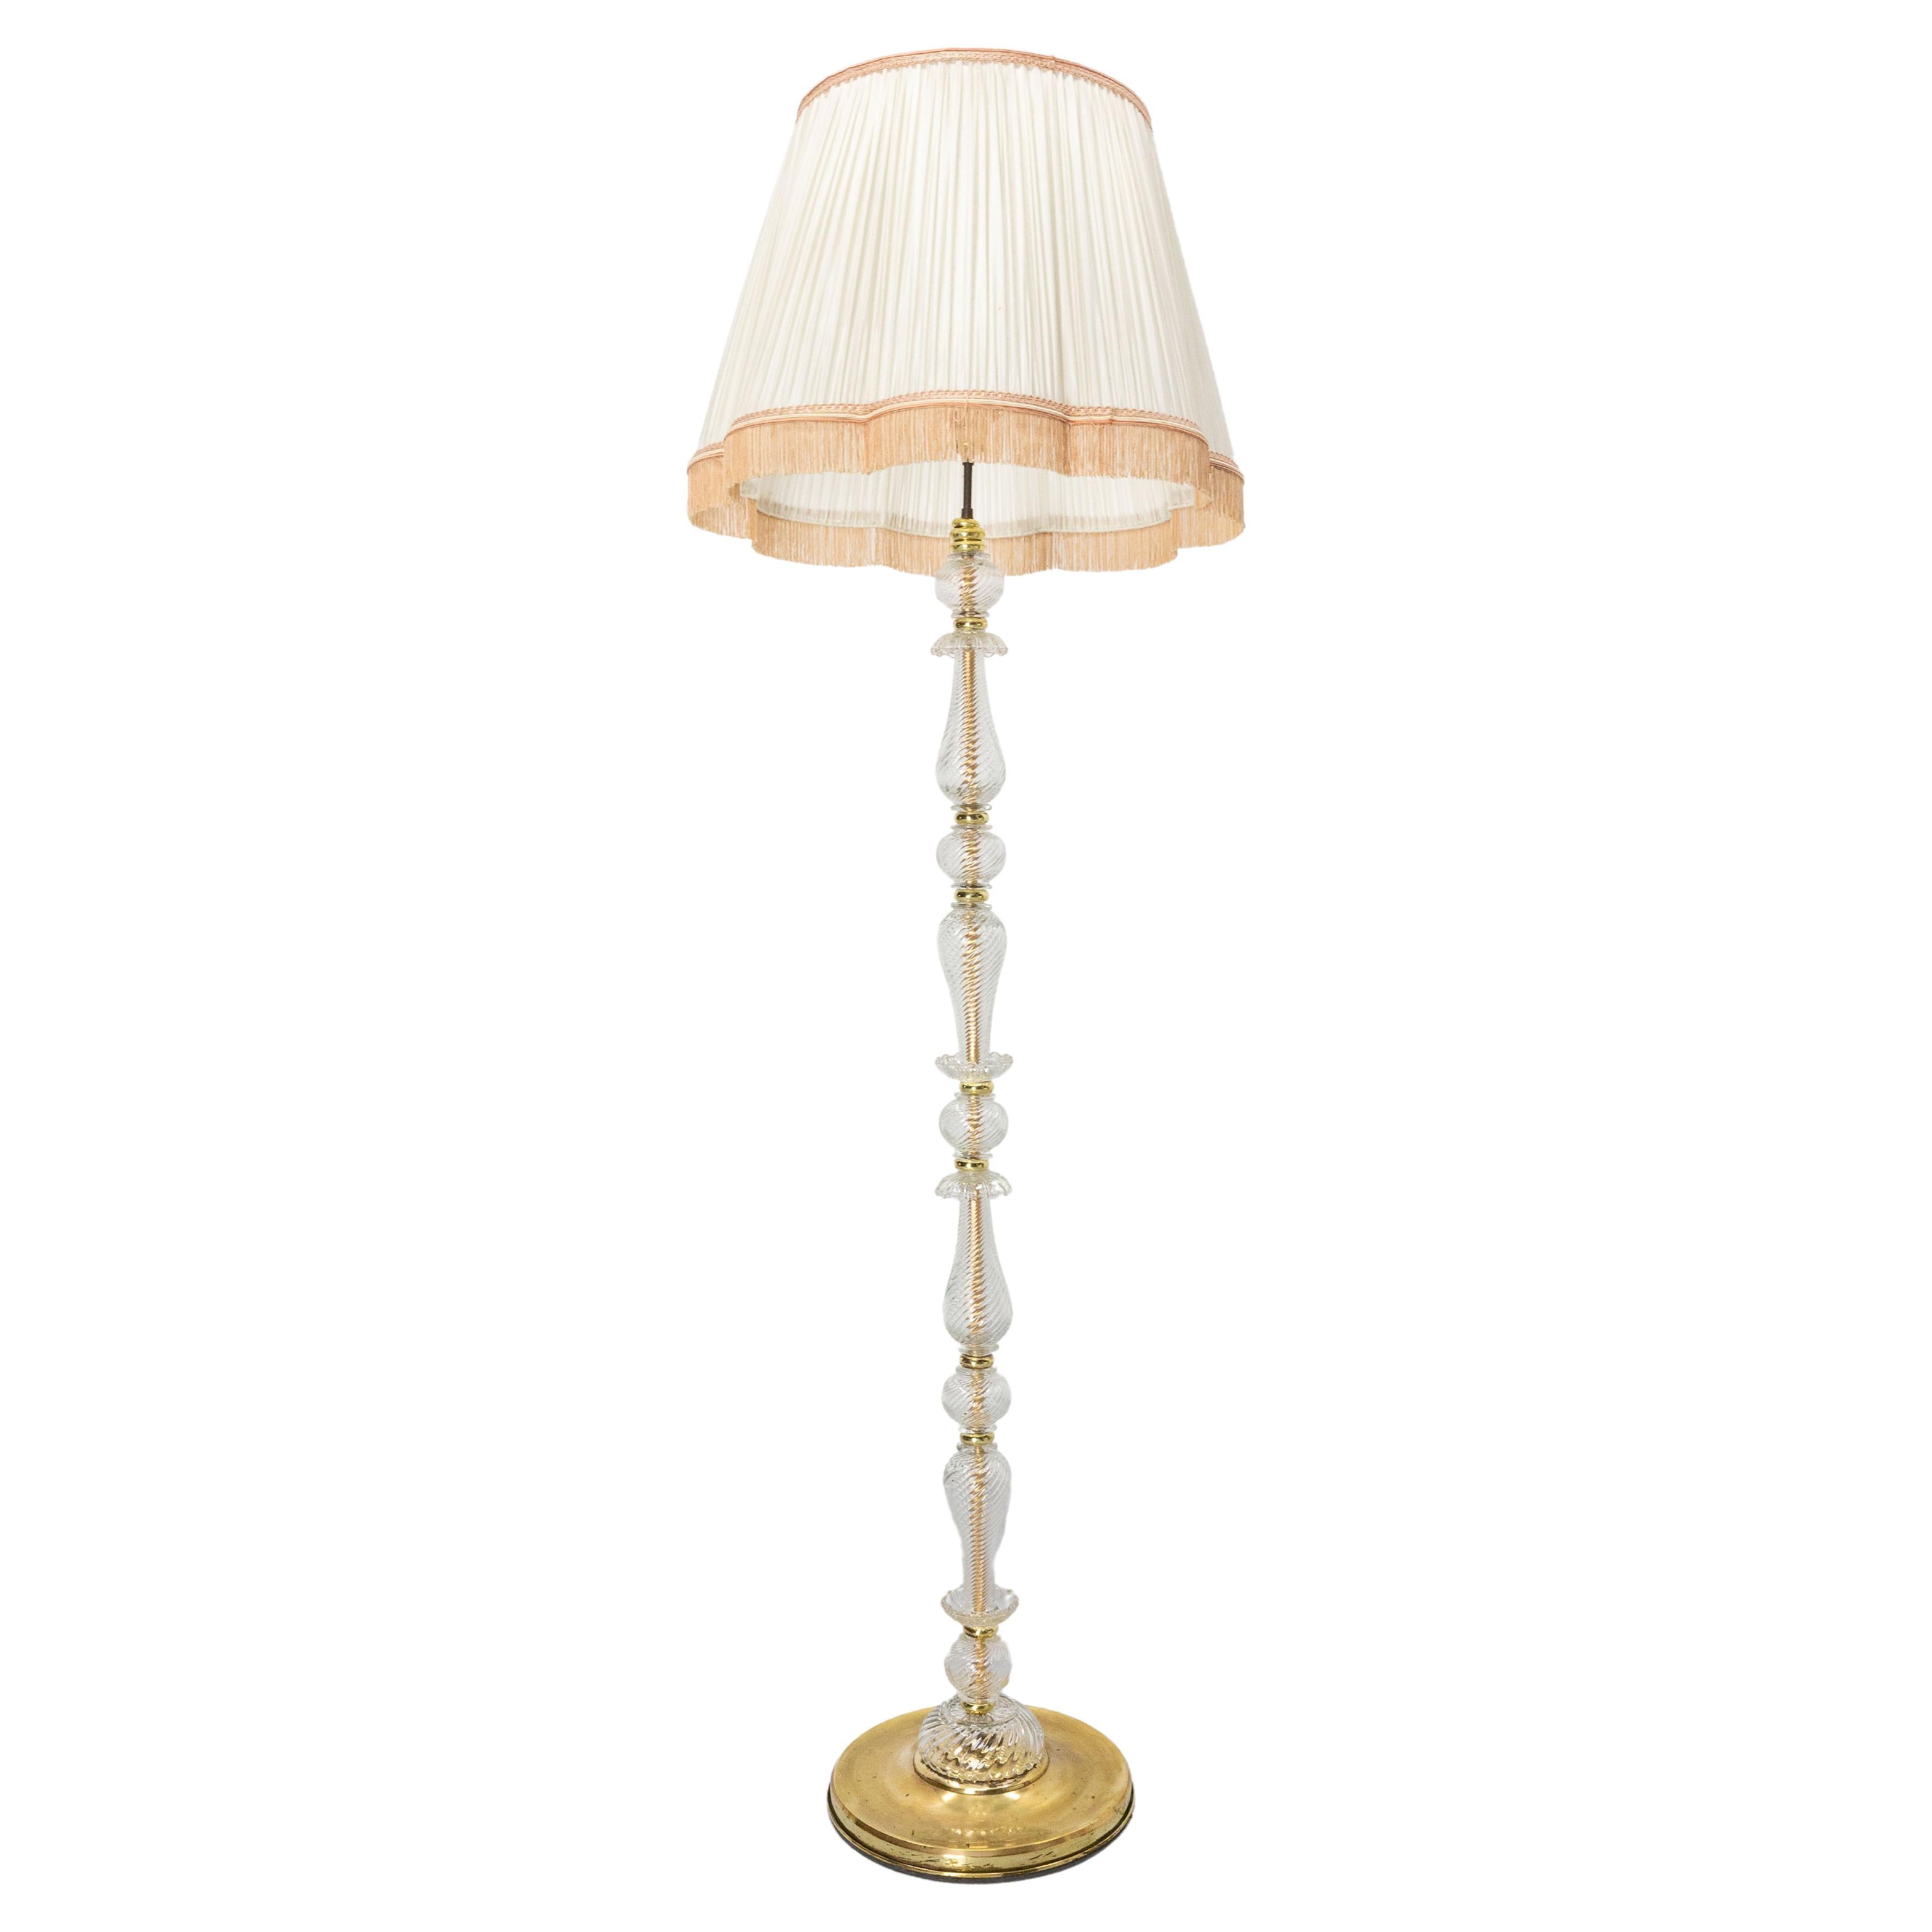 Glass & Brass Floor Lamp in the Murano Style Light Lantern, French, circa 1960